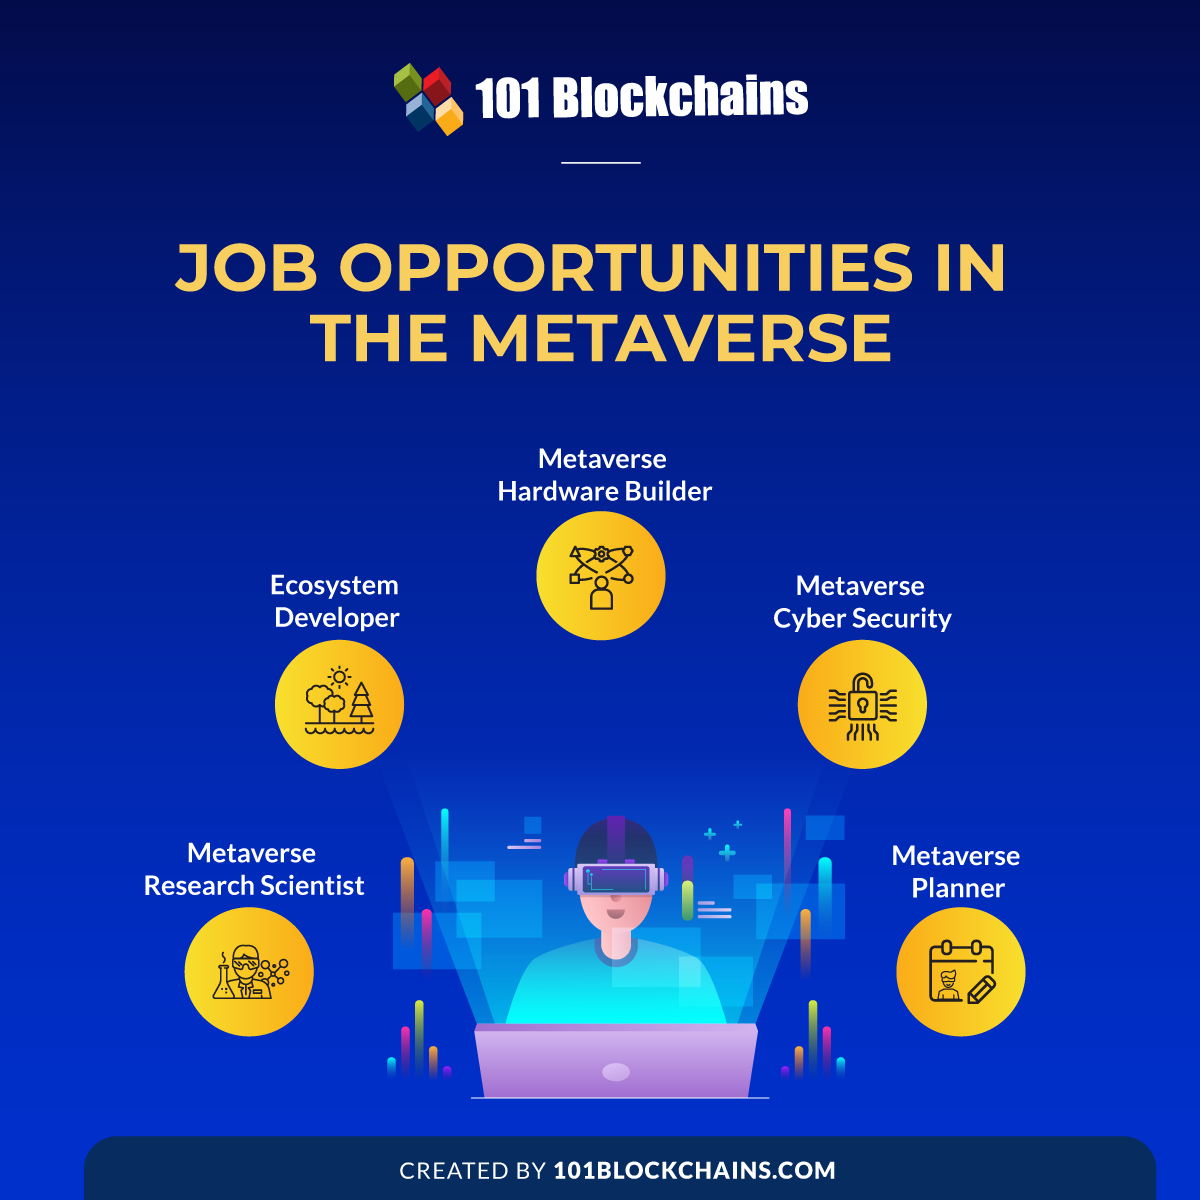 Job Opportunities in the Metaverse